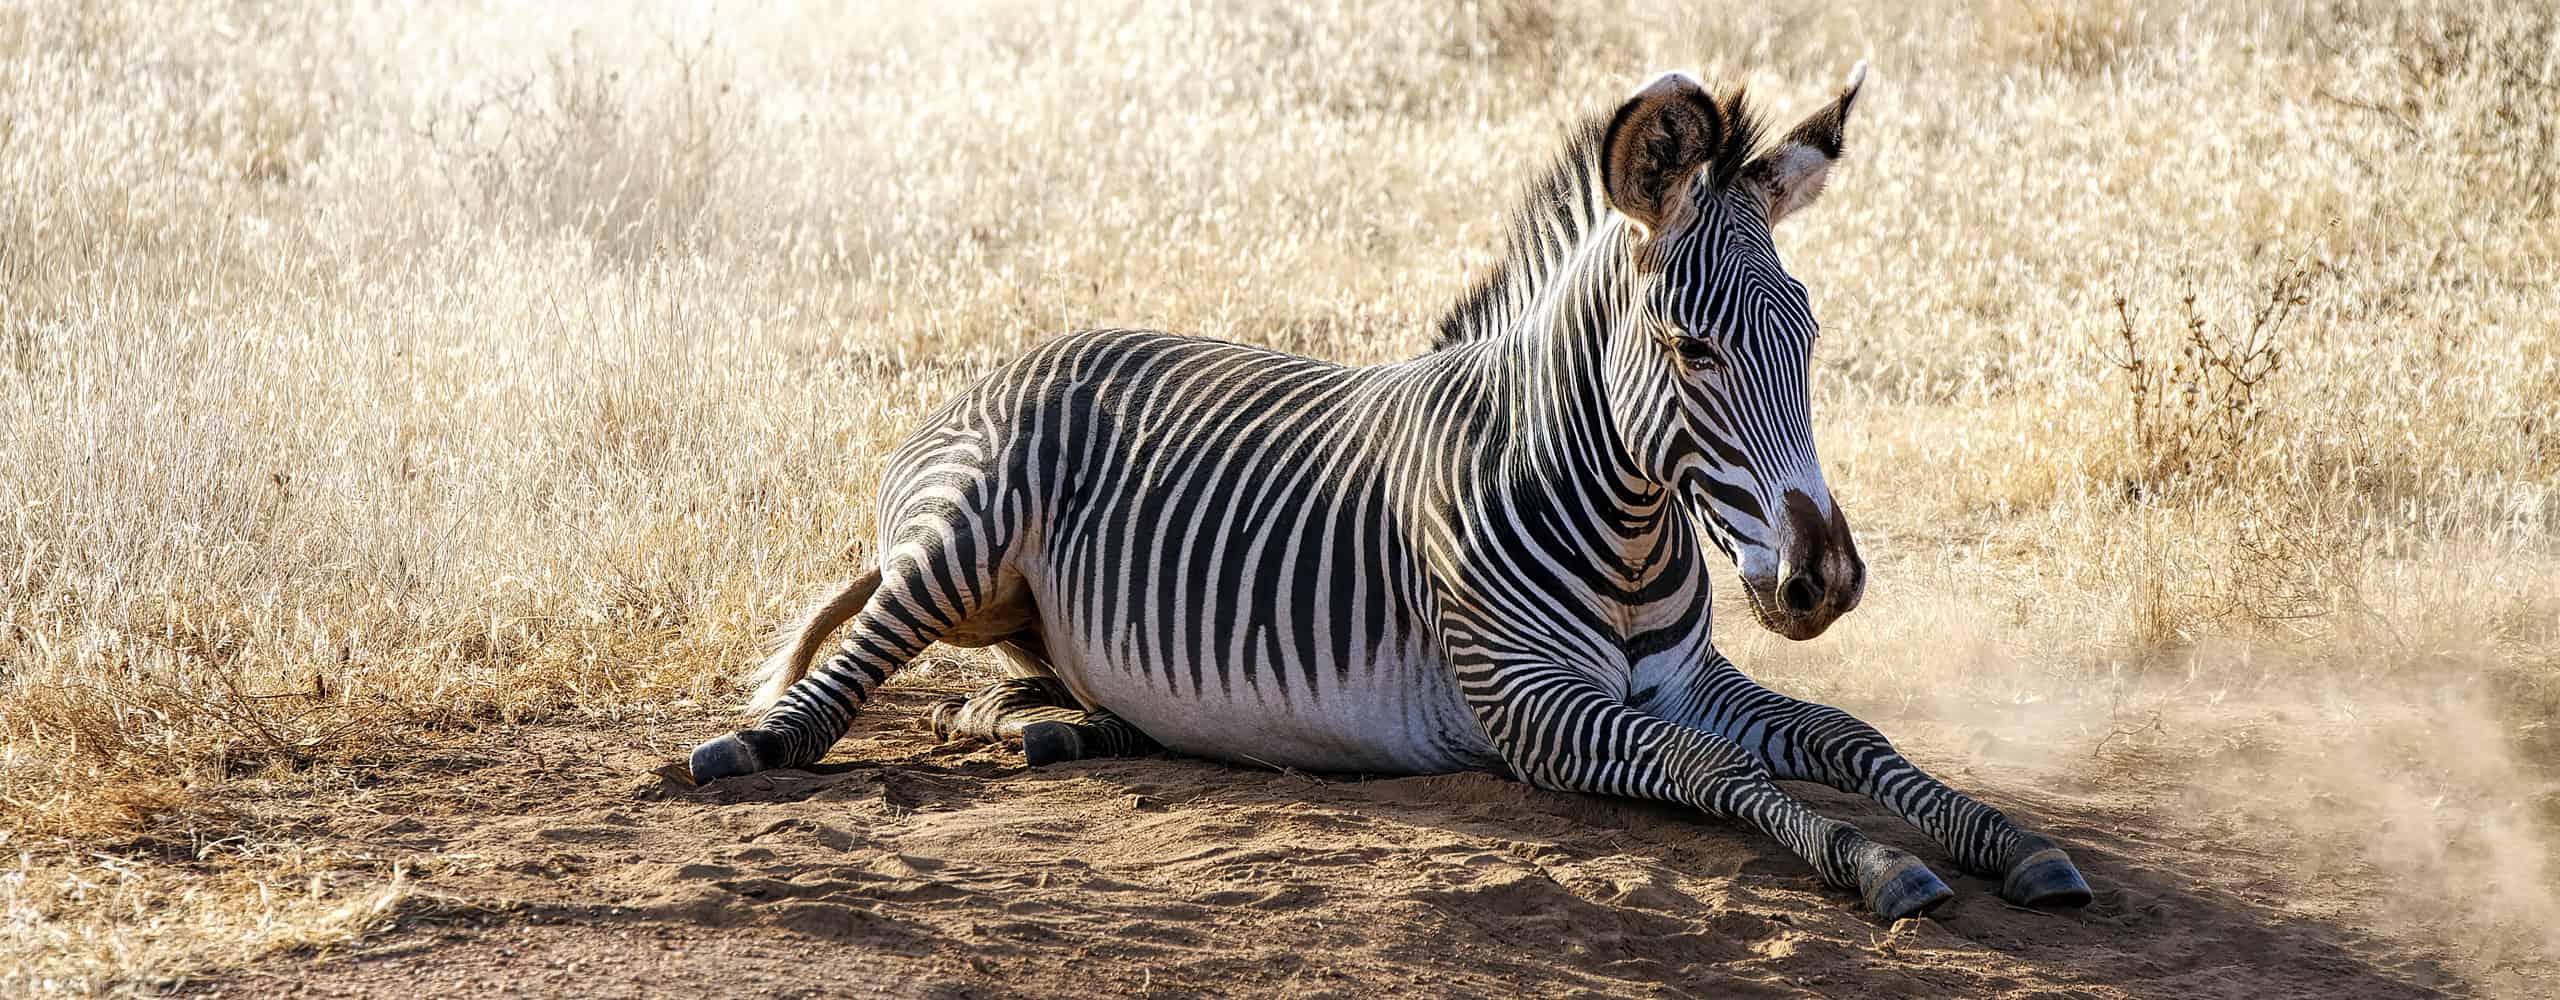 Zebra In Samburu National Reserve, Kenya